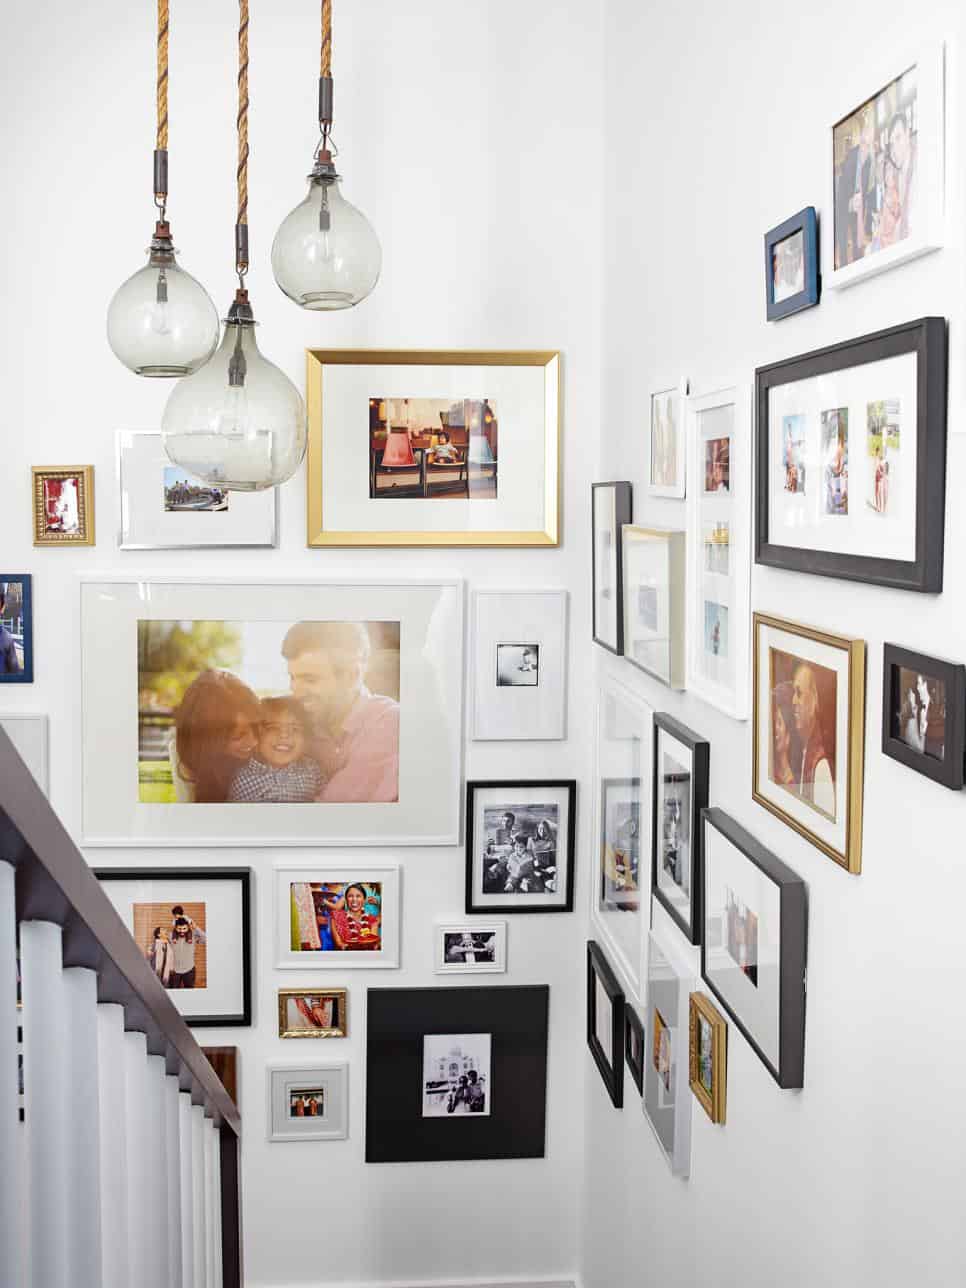 family photo wall arrangements